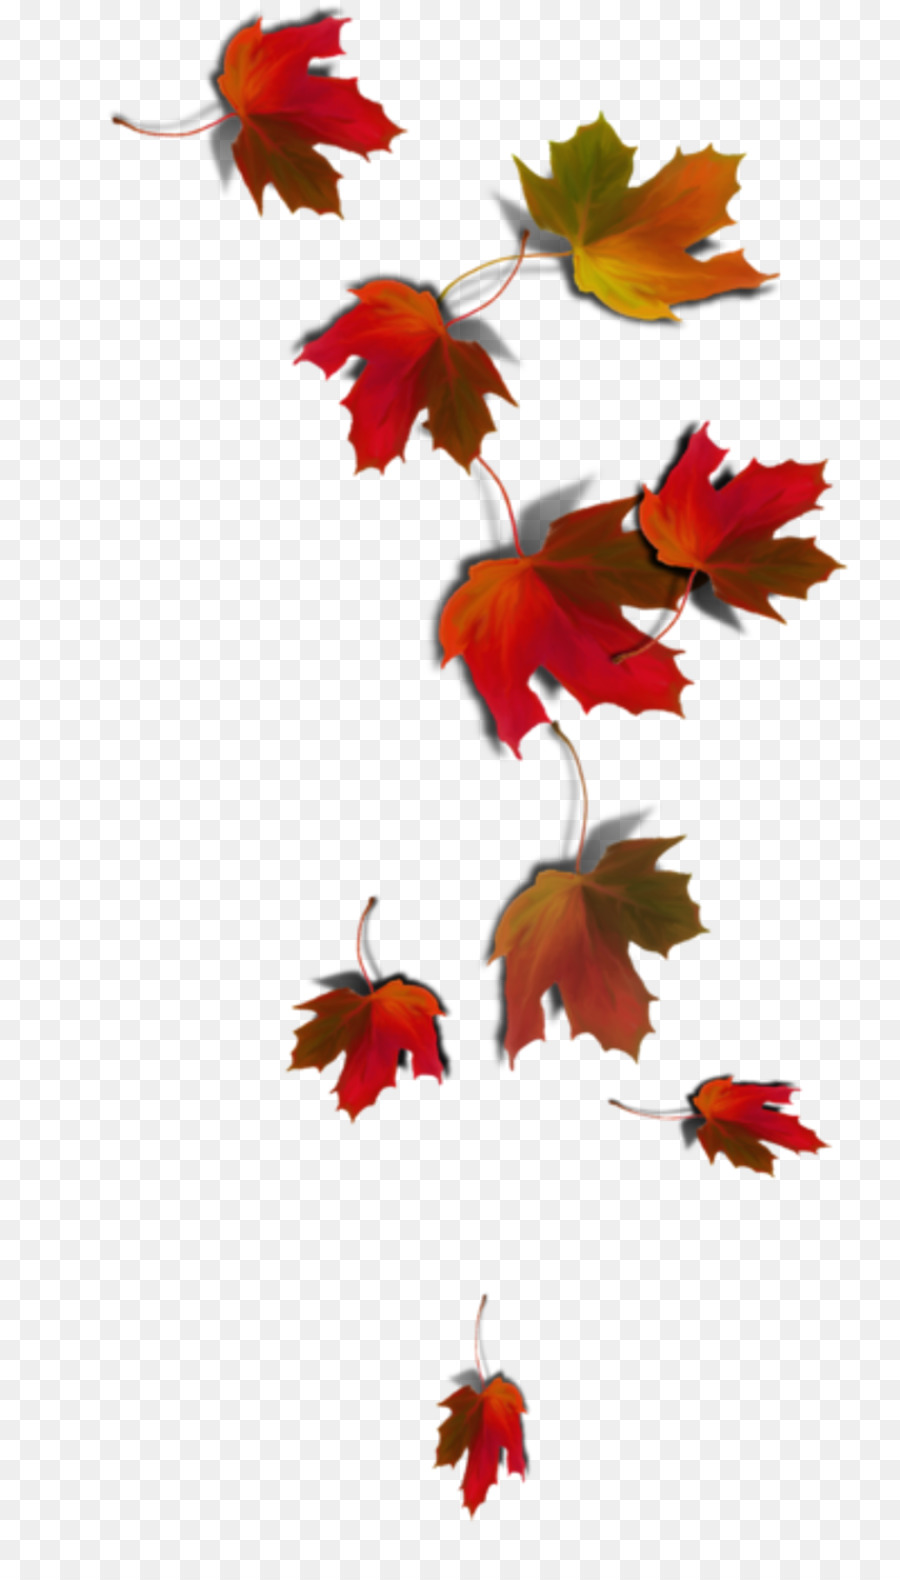 Maple leaf Autumn leaf color - autumn png download - 800*1577 - Free Transparent Maple Leaf png Download.